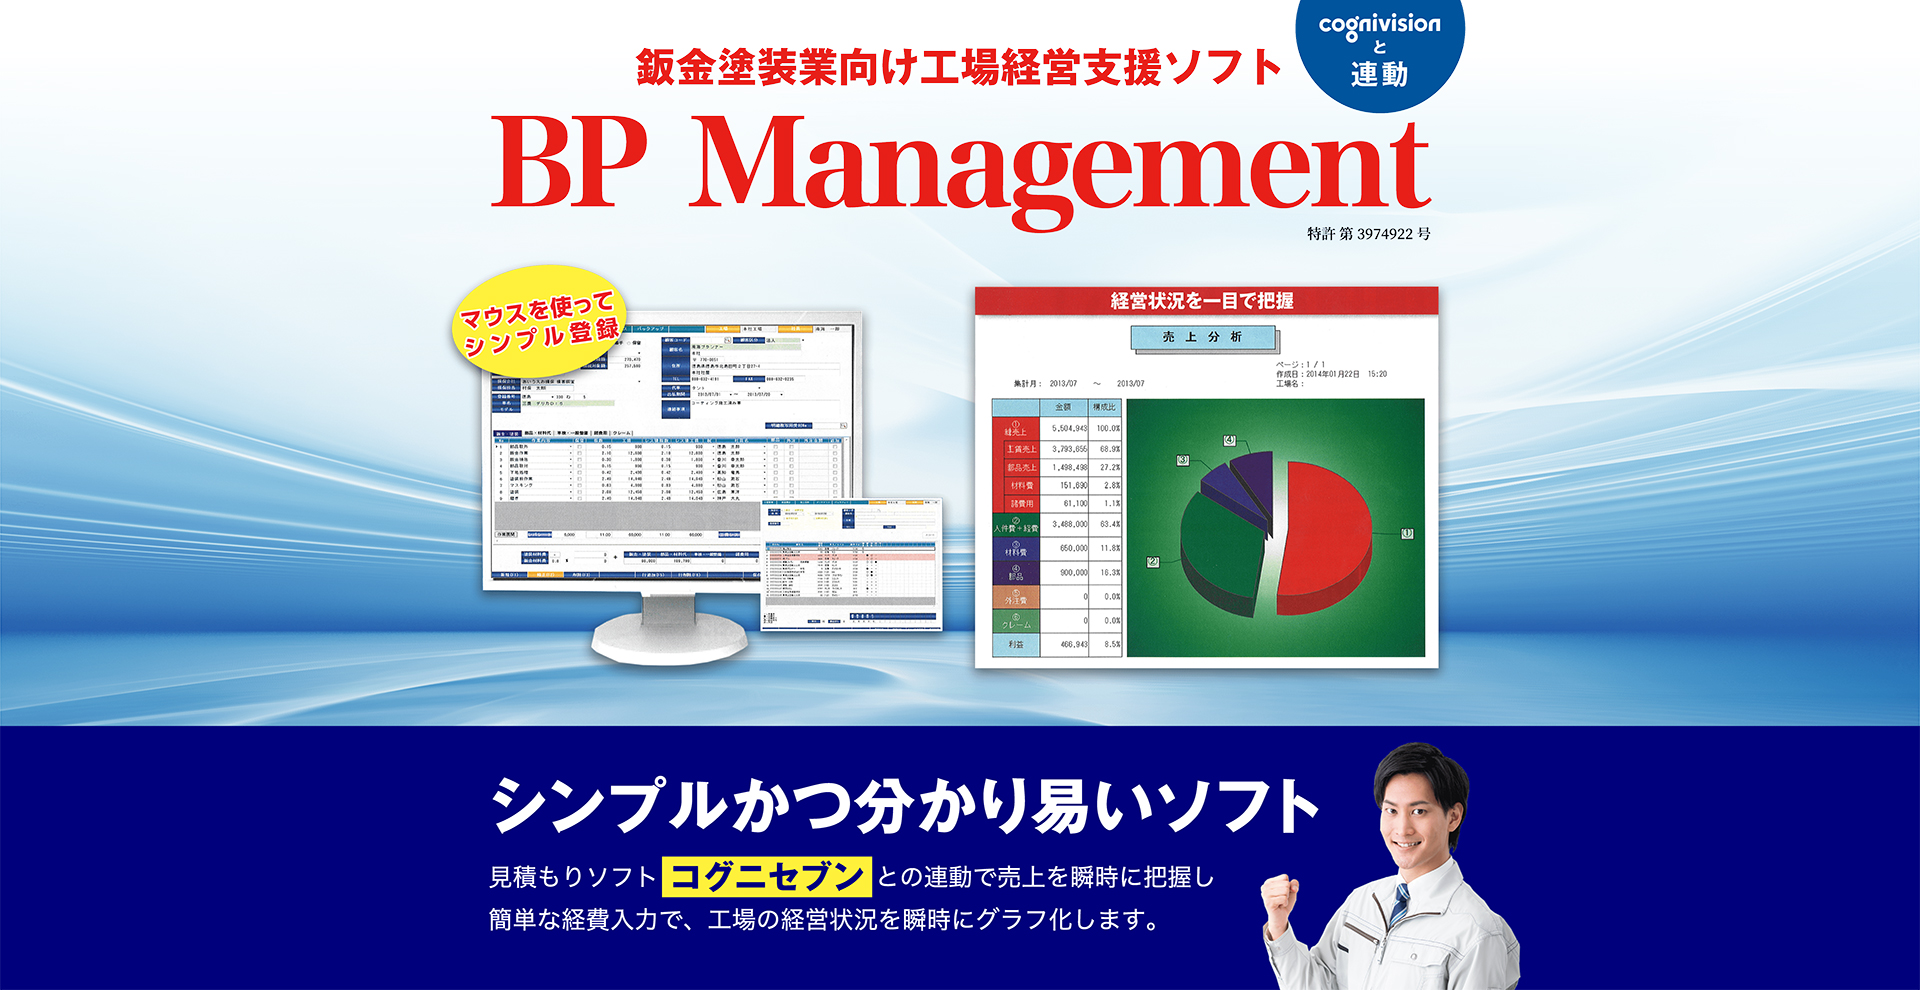 BP Management